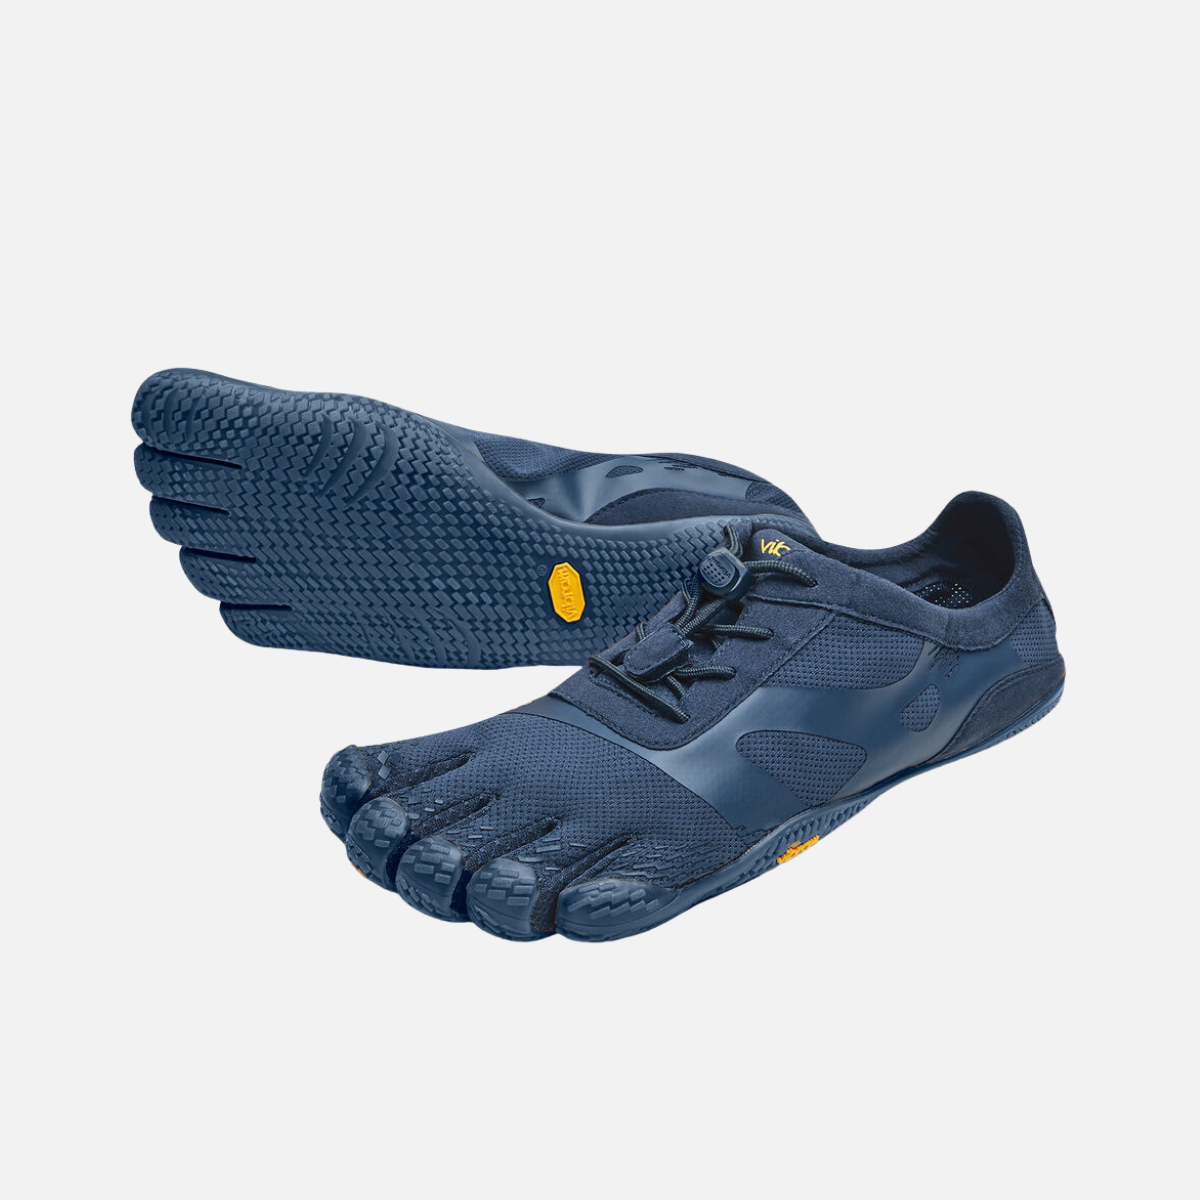 Vibram Kso Evo Mens Barefoot Training Footwear - Blue